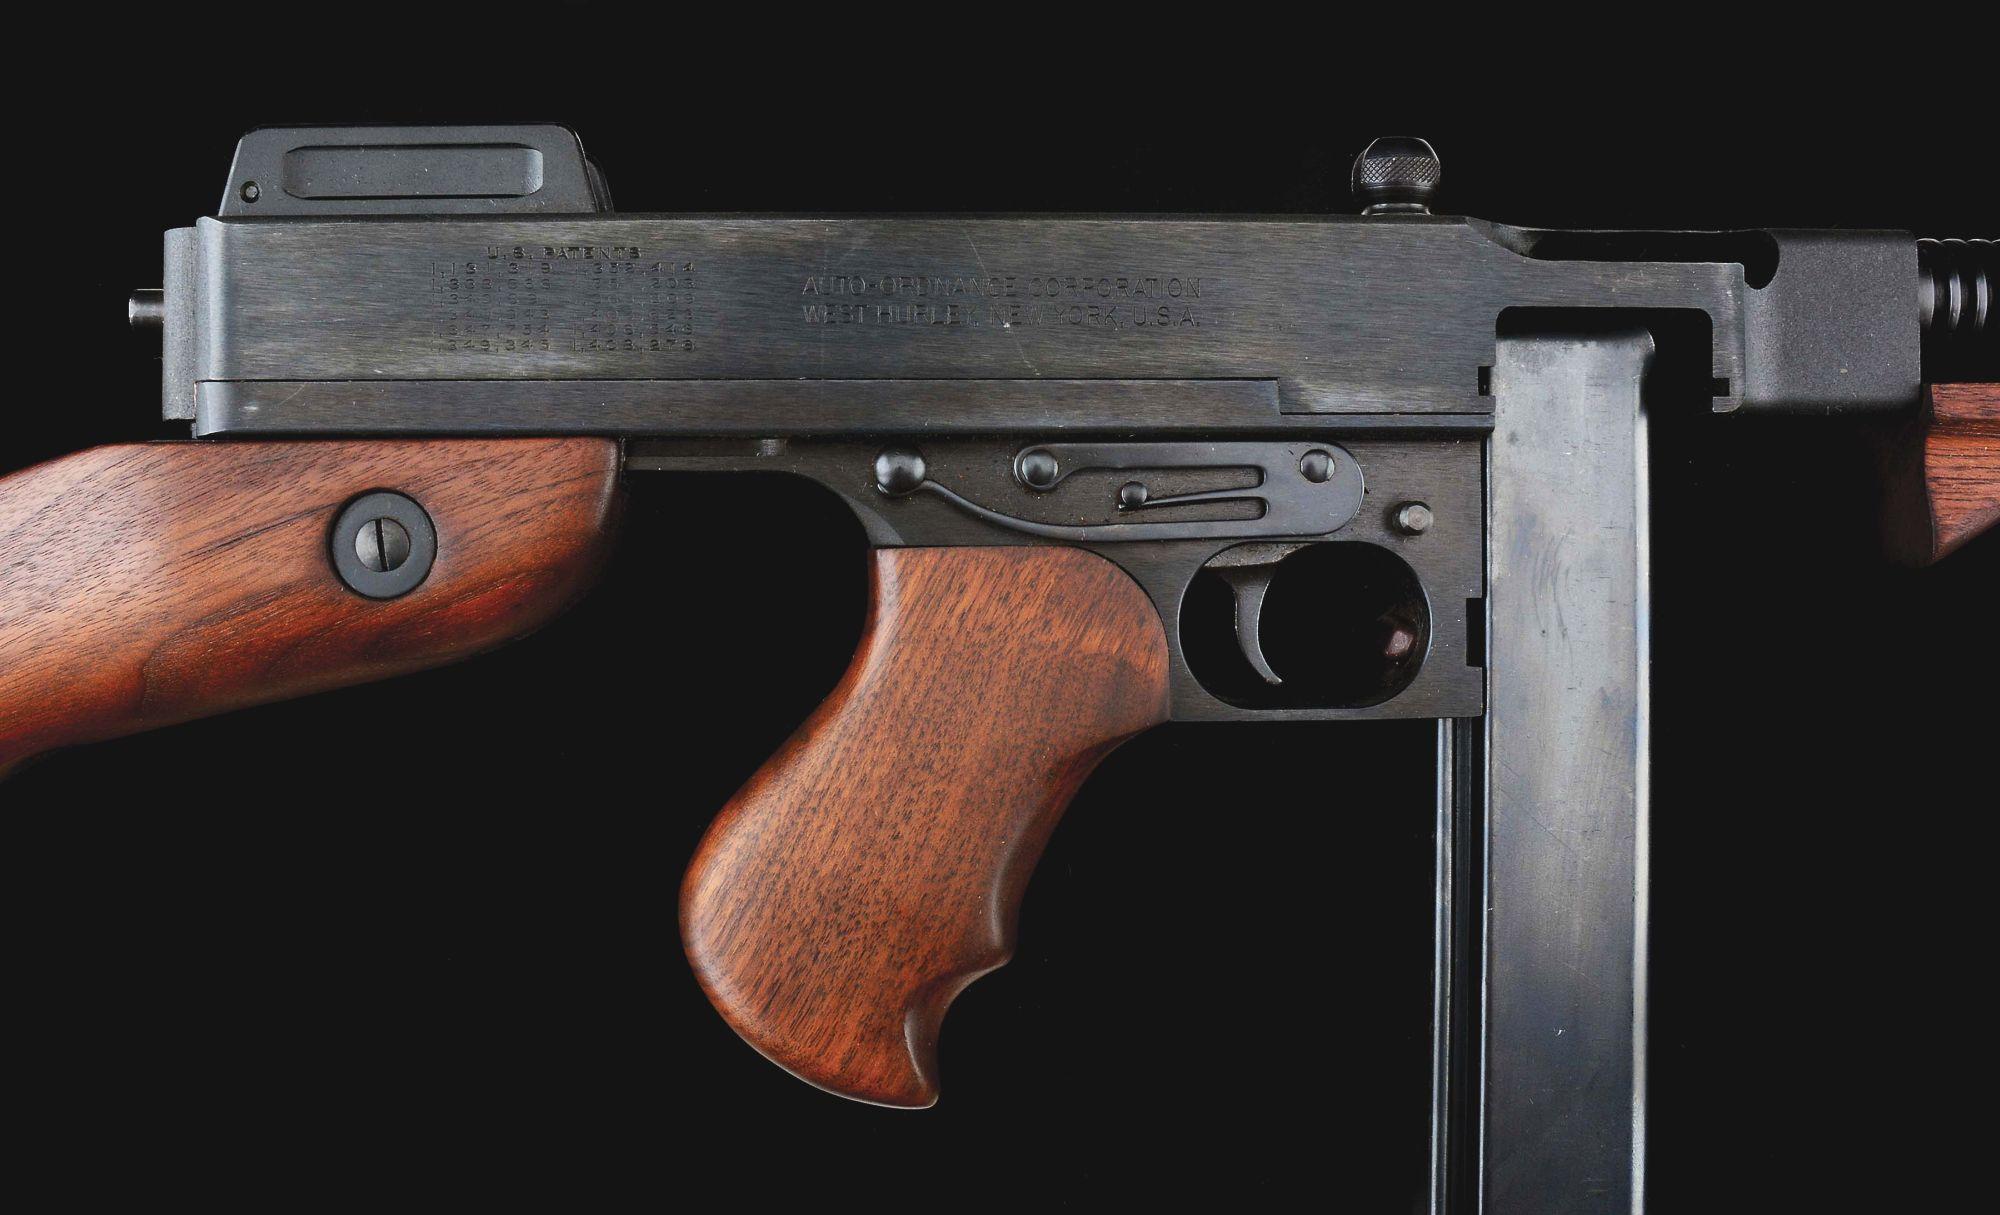 (N) INCREDIBLE New in Box Auto Ordnance Thompson 1928 West Hurley Machine Gun (CURIO & RELIC)